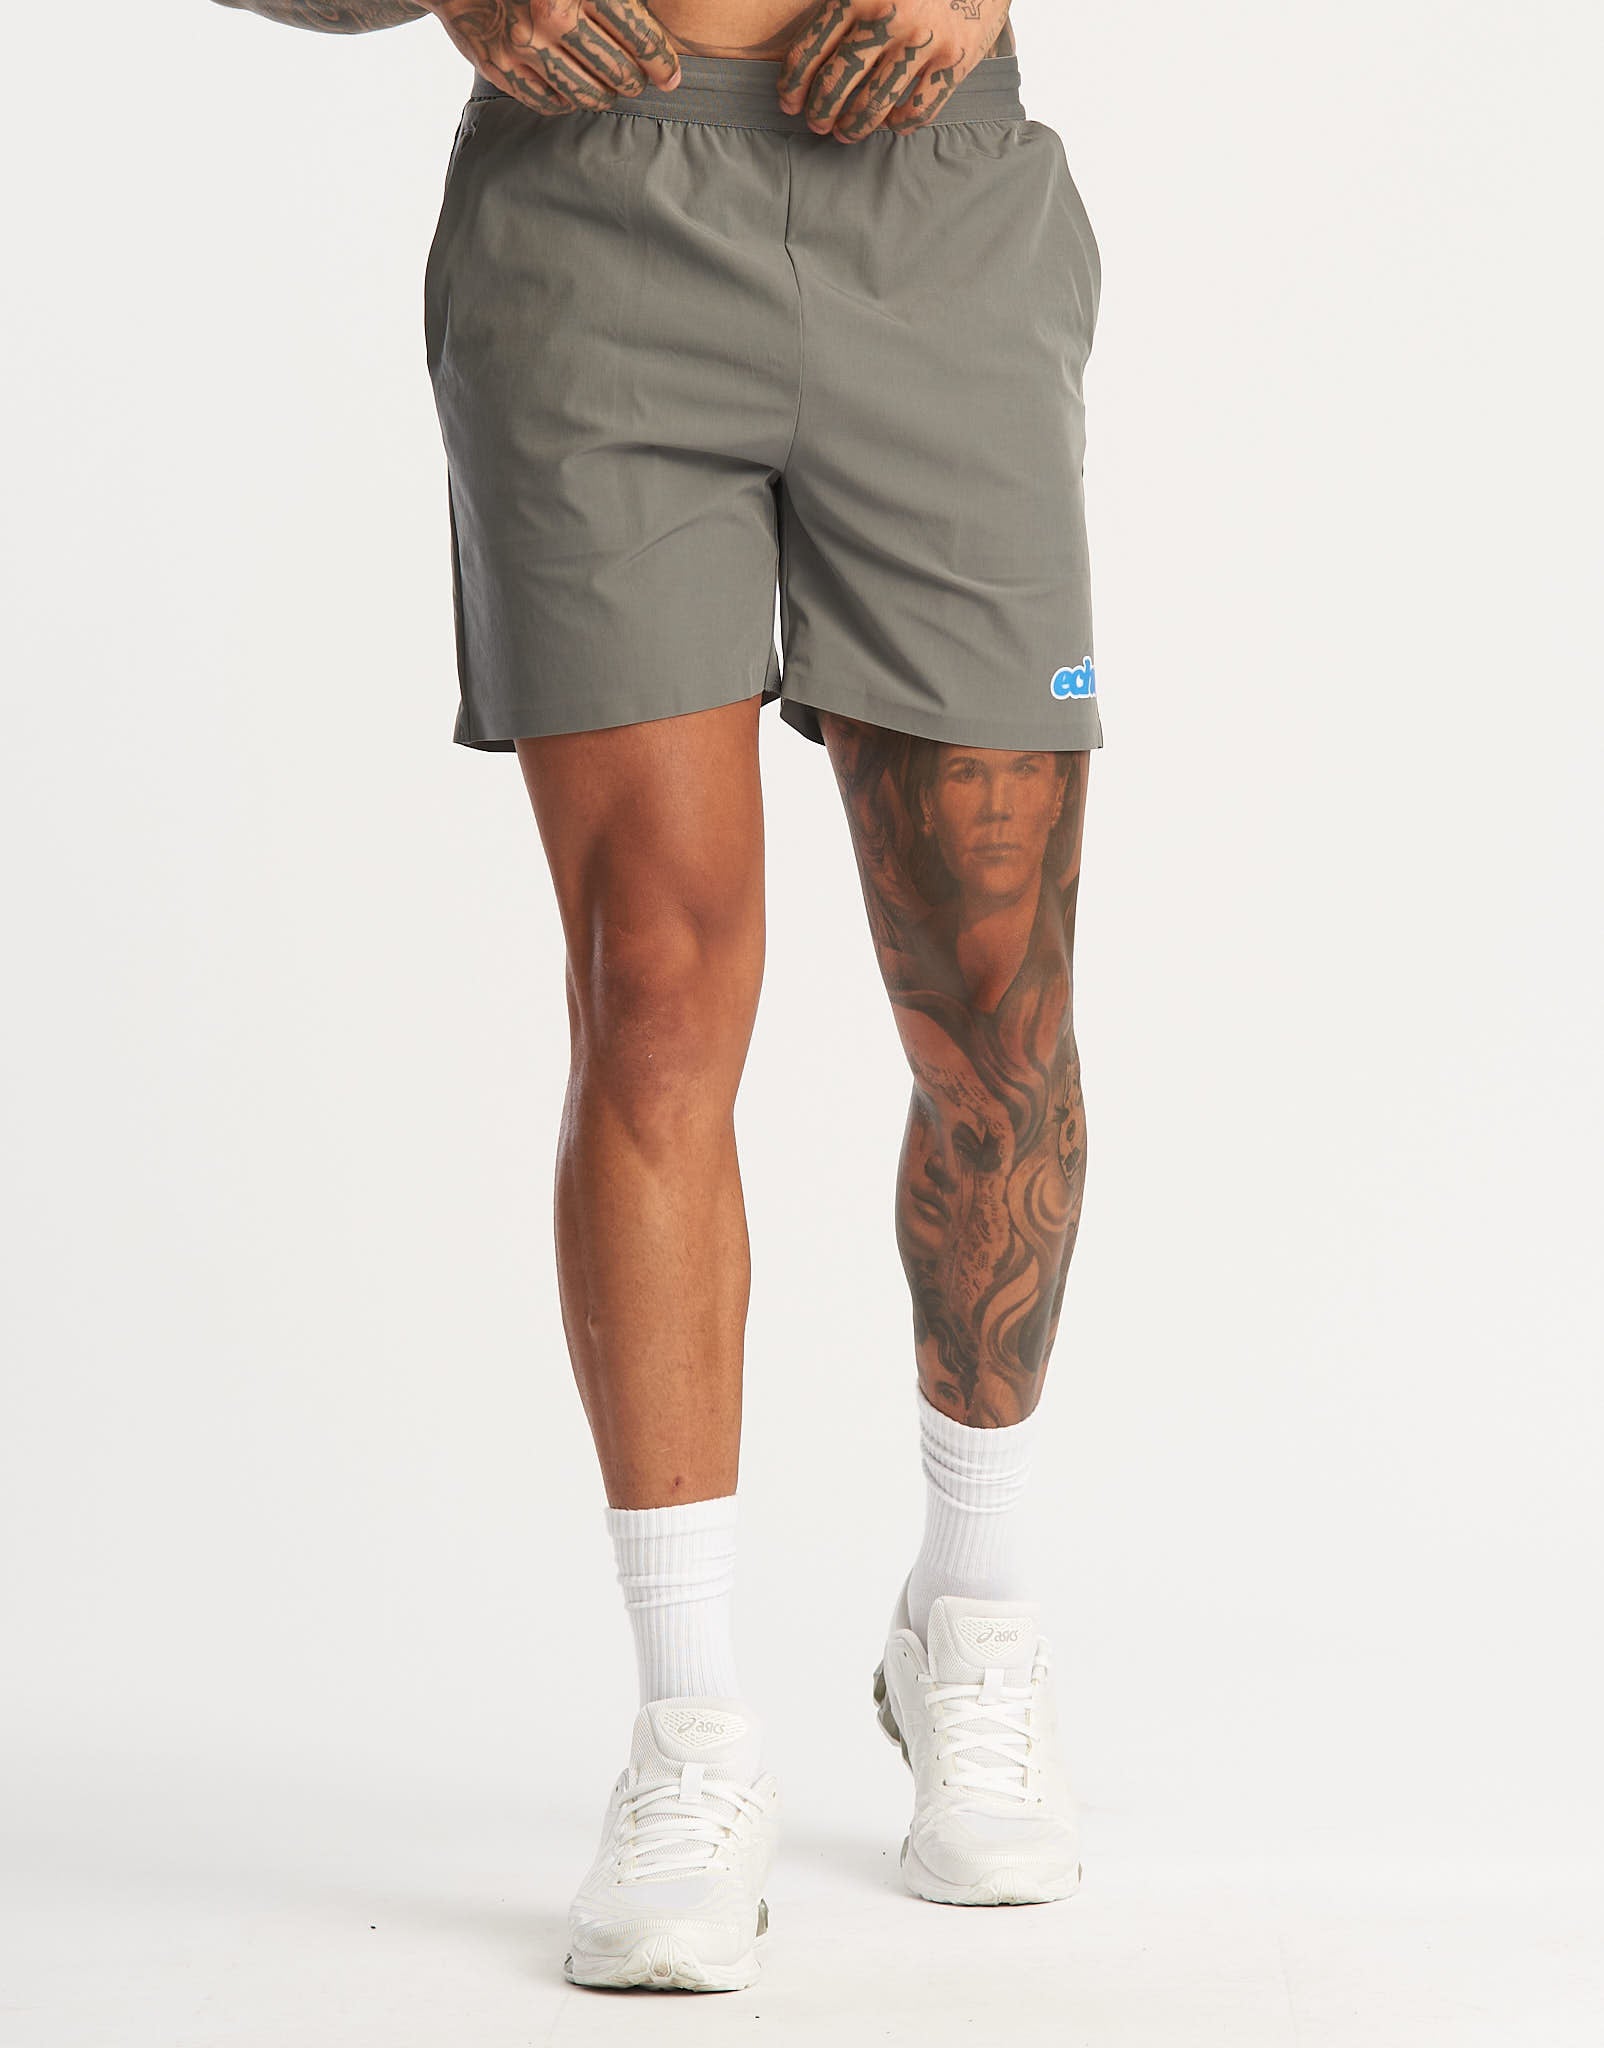 Blur Shorts - Grey